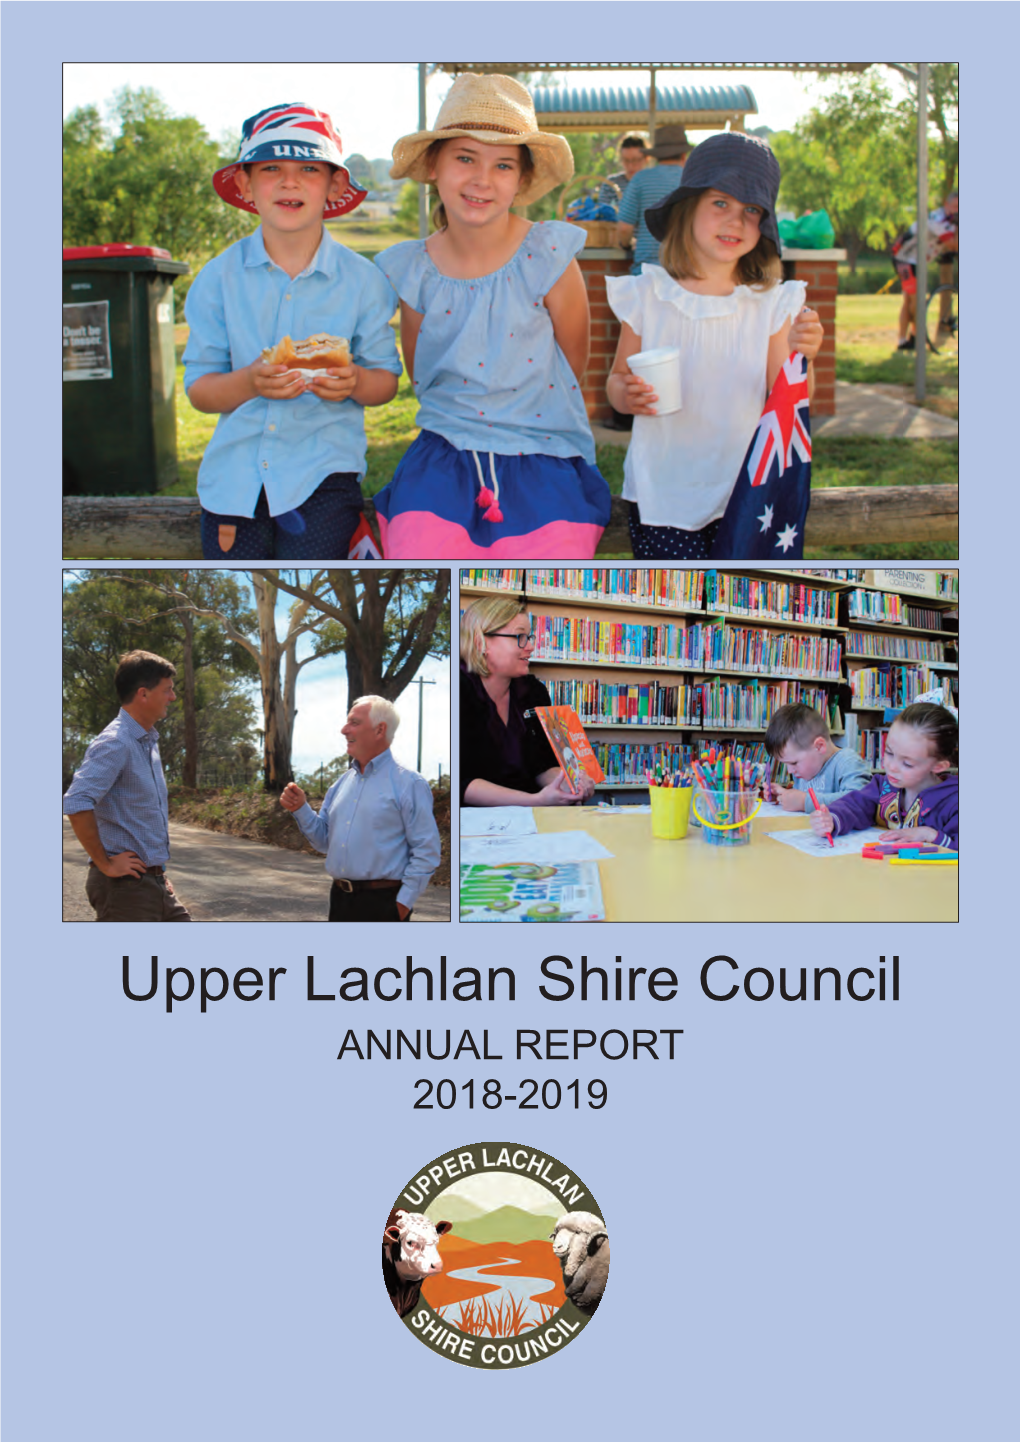 Annual Report 2018-2019 [Upper Lachlan Shire Council Annual Report] 2018-2019